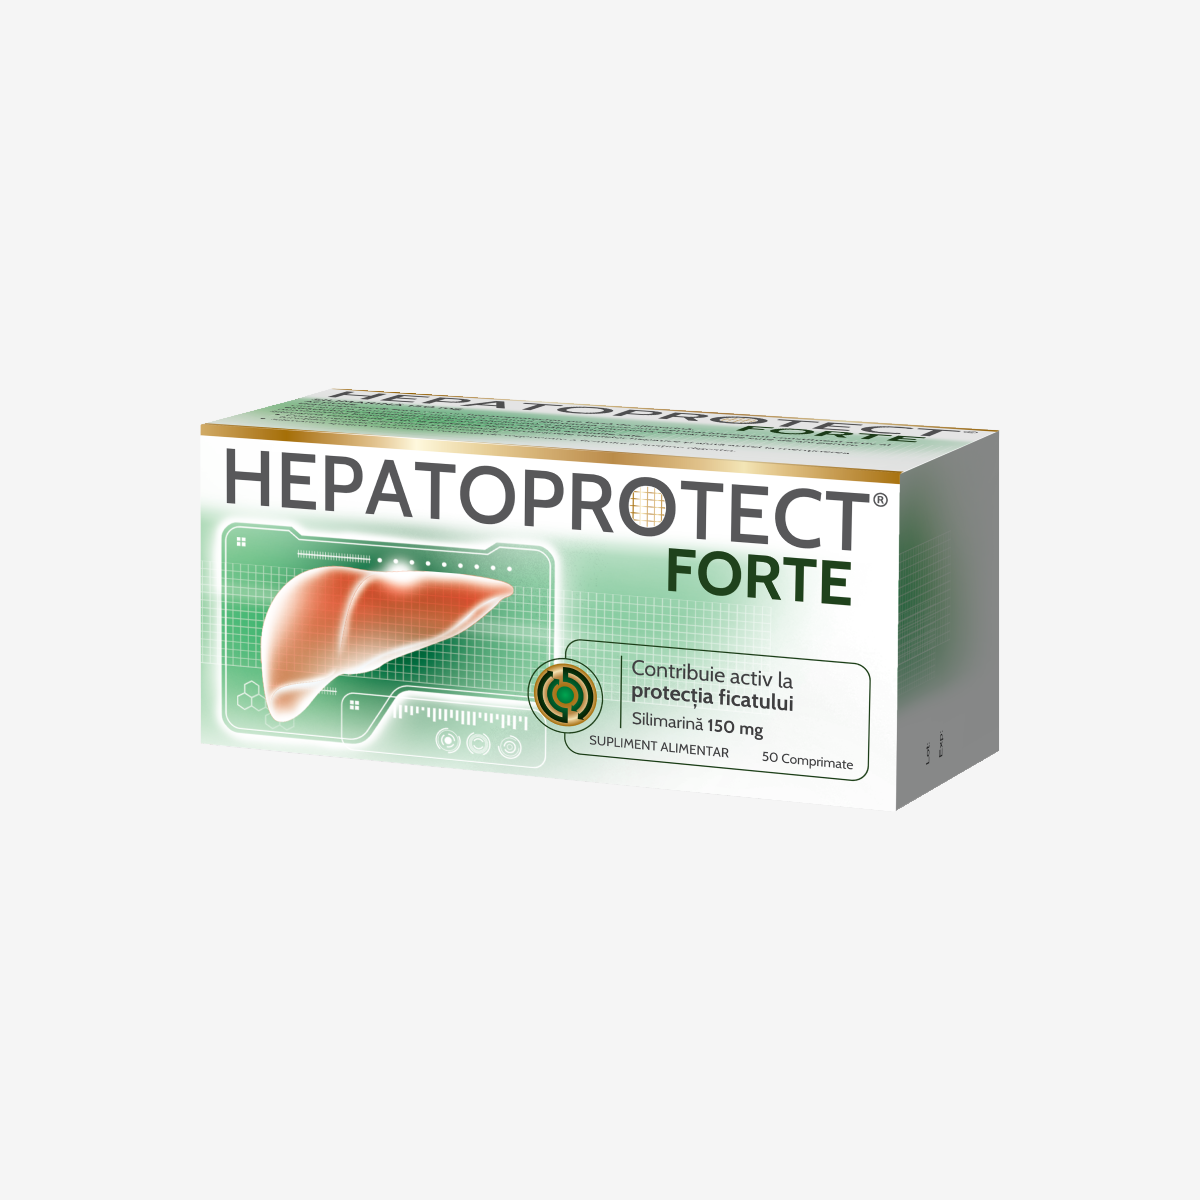 Hepatoprotectoare - Hepatoprotect Forte, 50 Comprimate, Biofarm, farmacieieftina.ro